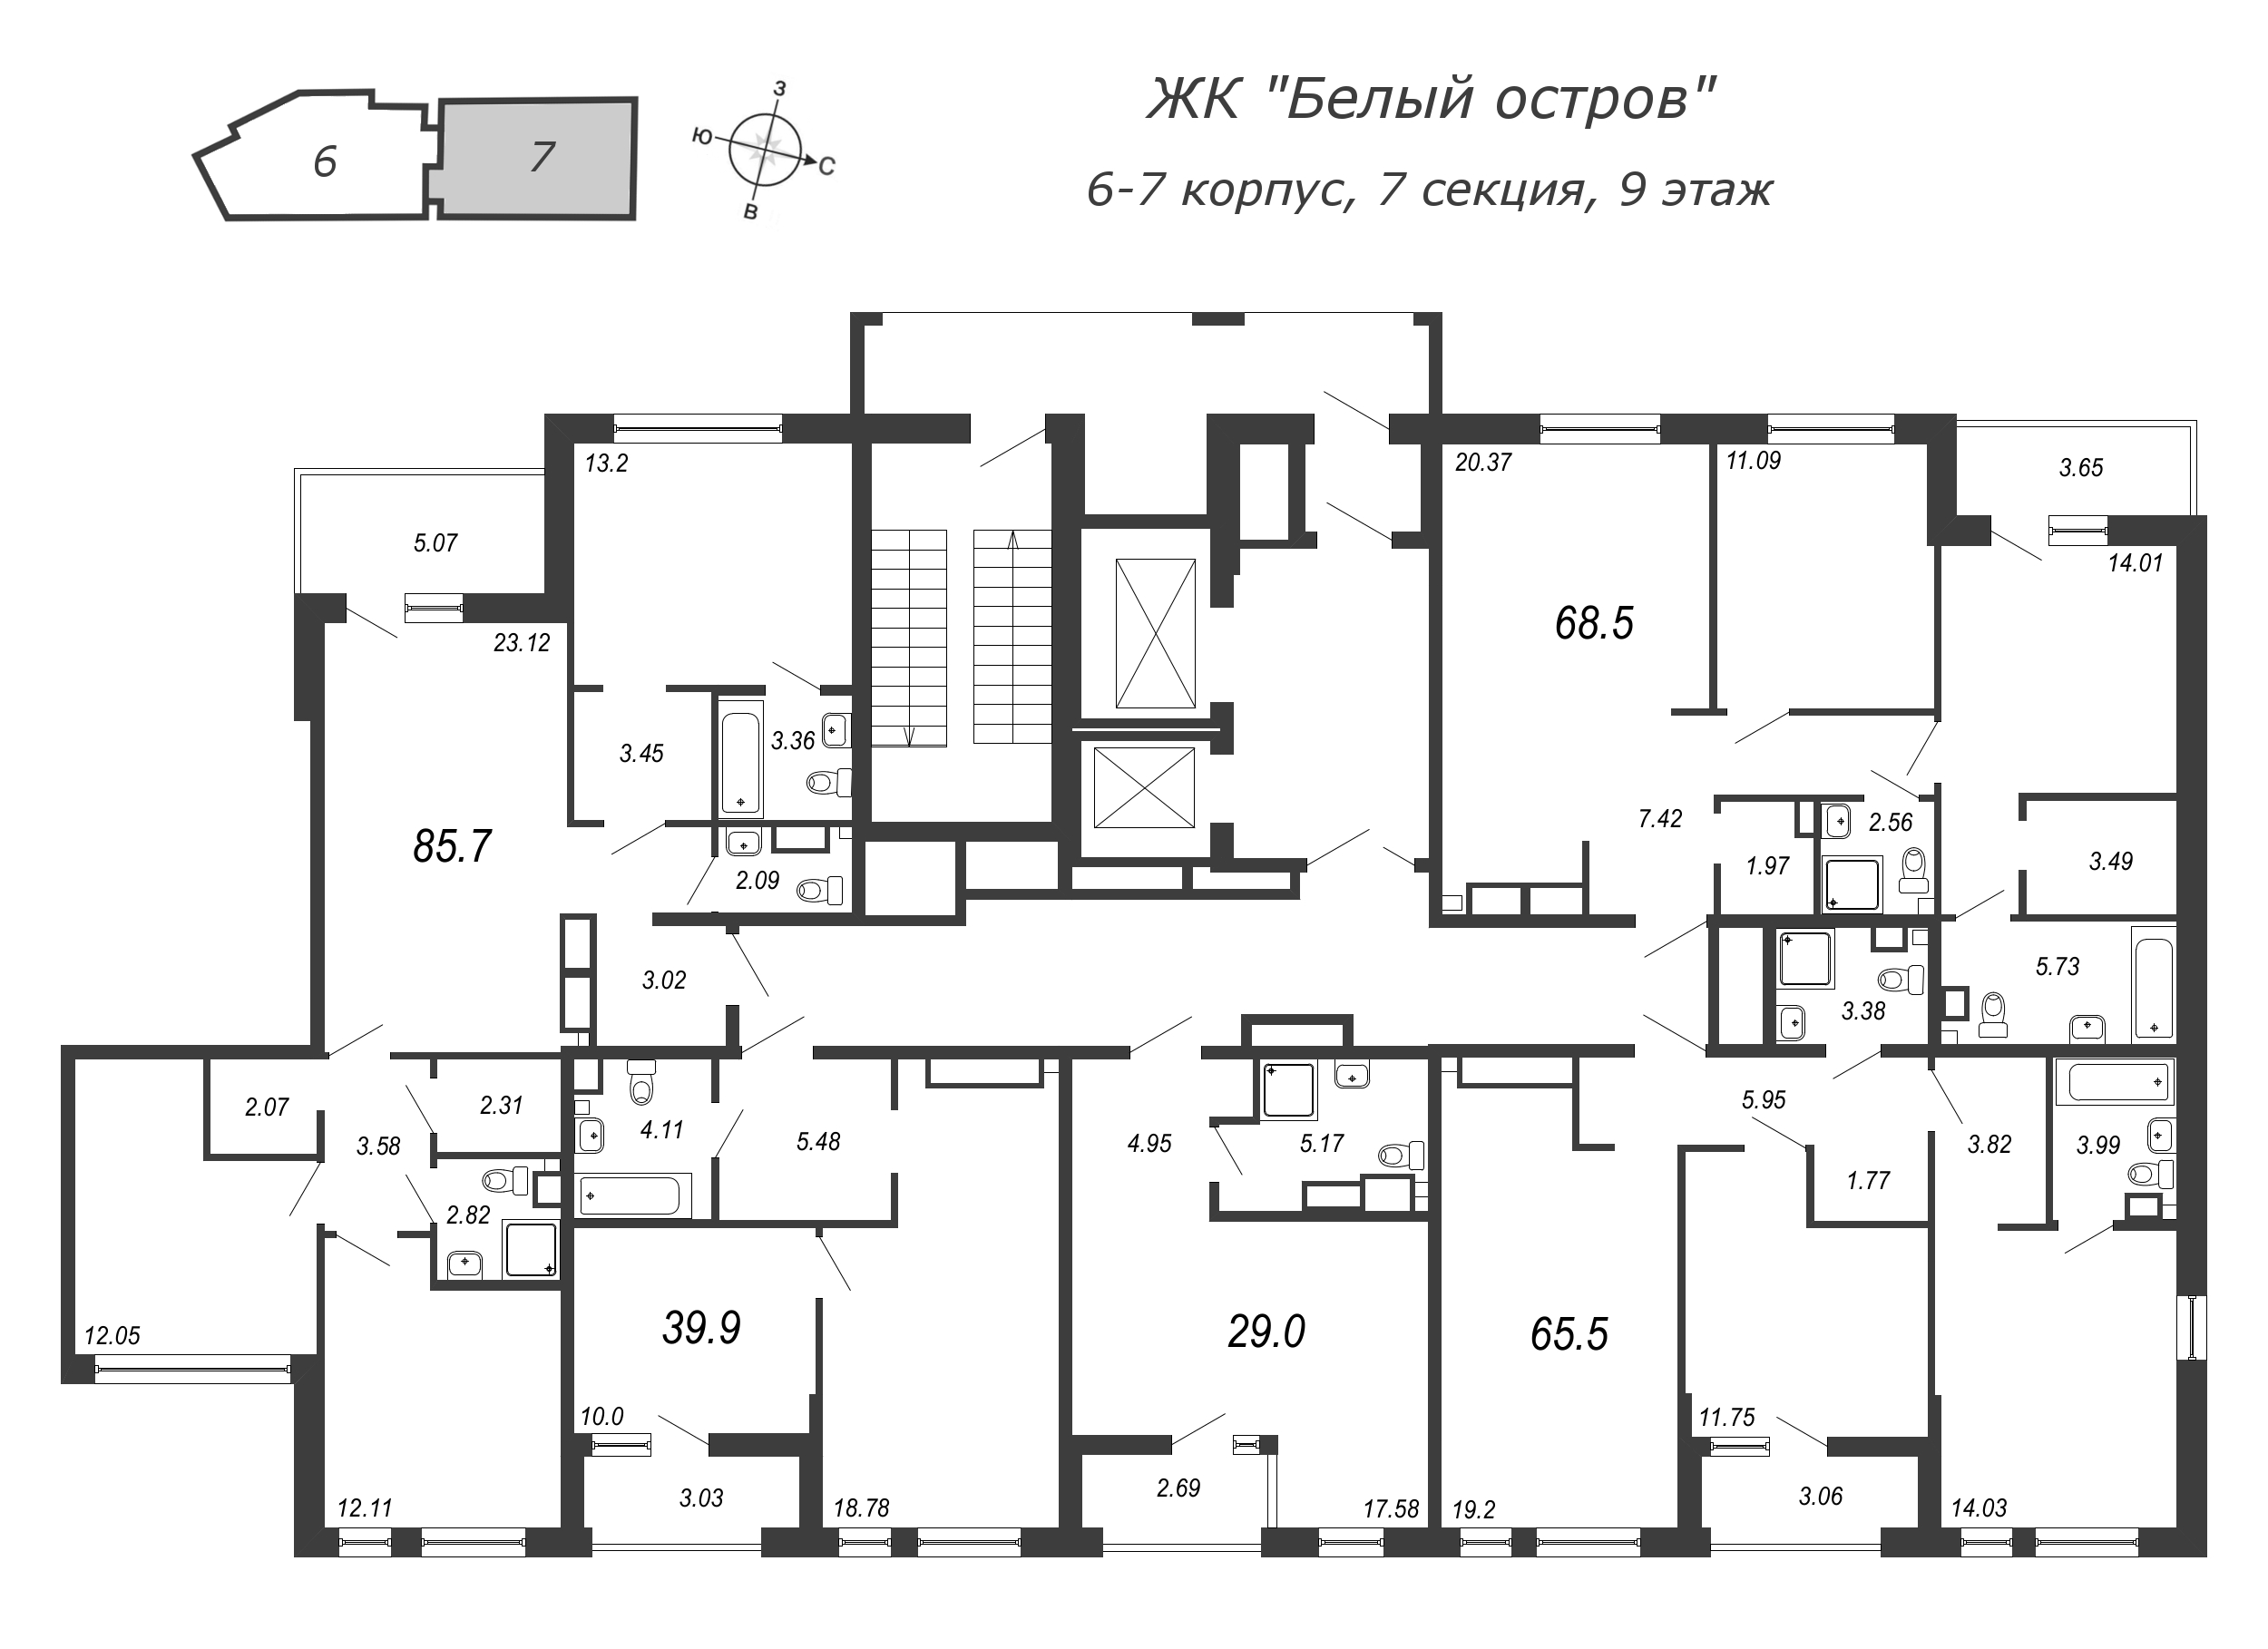 4-комнатная (Евро) квартира, 86.7 м² - планировка этажа